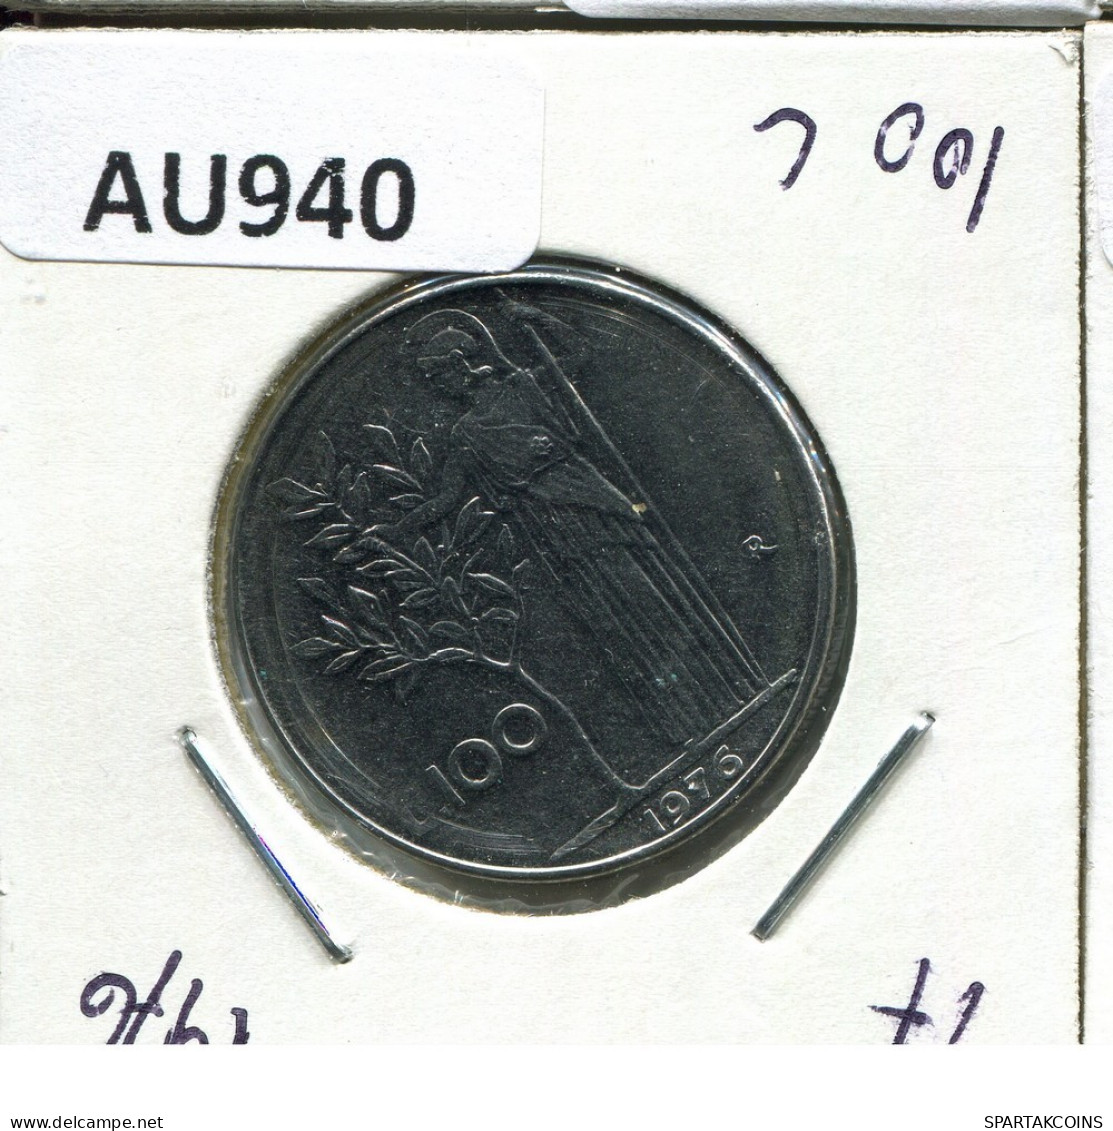 100 LIRE 1976 ITALIA ITALY Moneda #AU940.E.A - 100 Liras